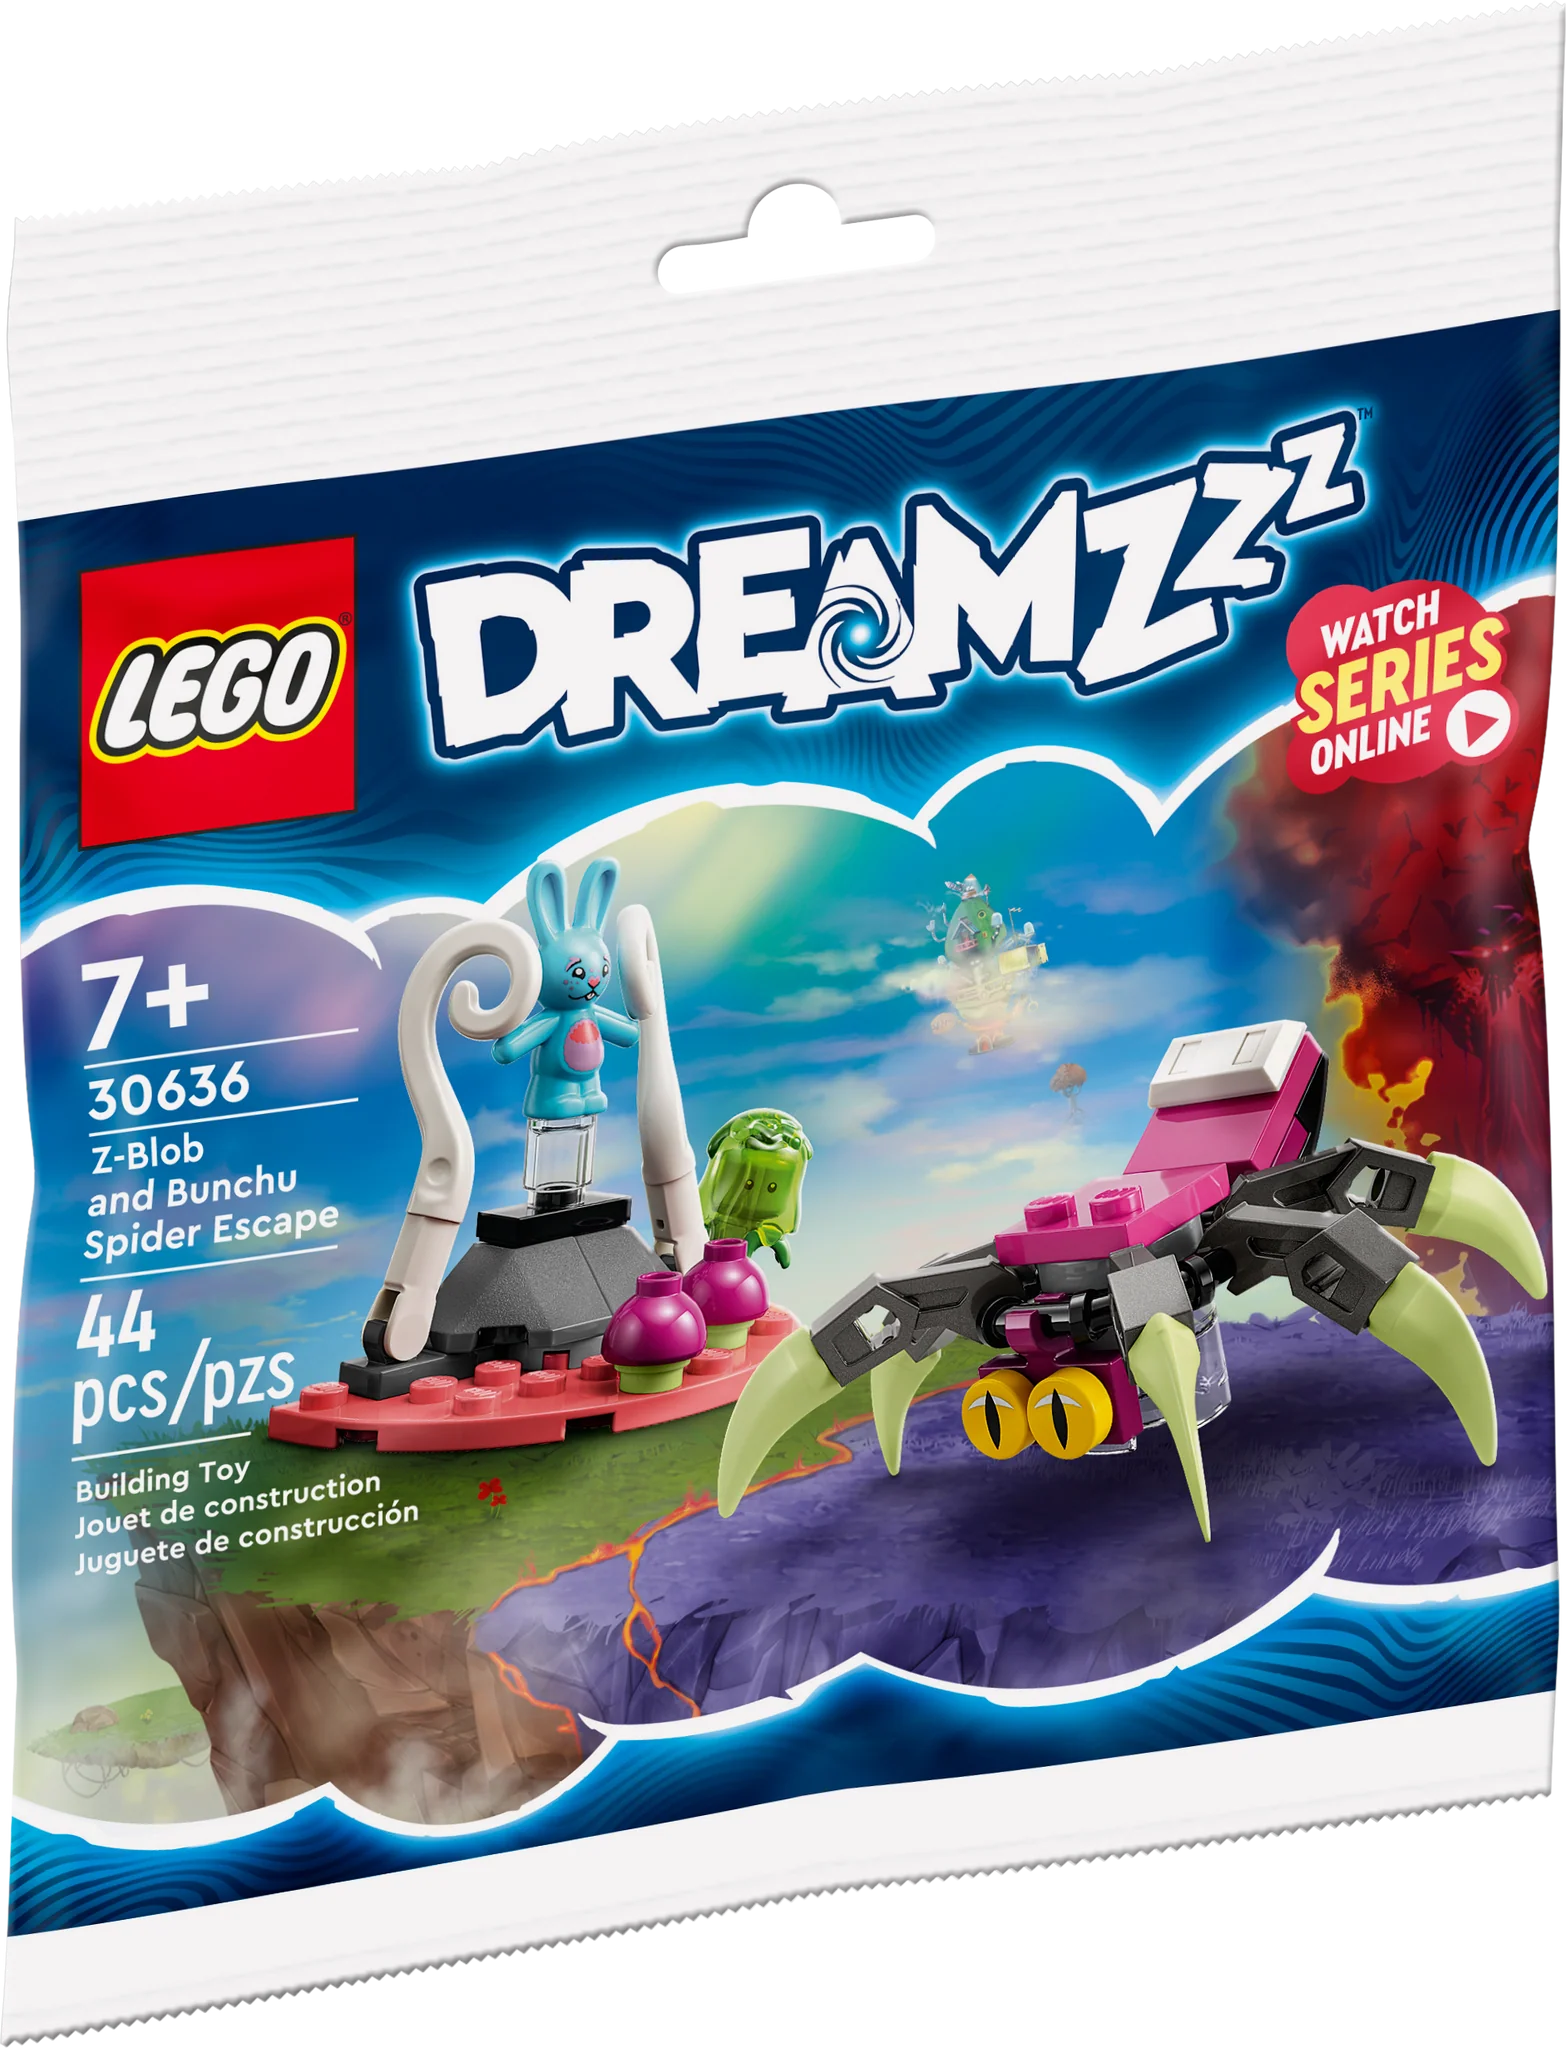 Z-Blob and Bunch Spider Escape - LEGO Dreamzzz Polybag Set (30636)